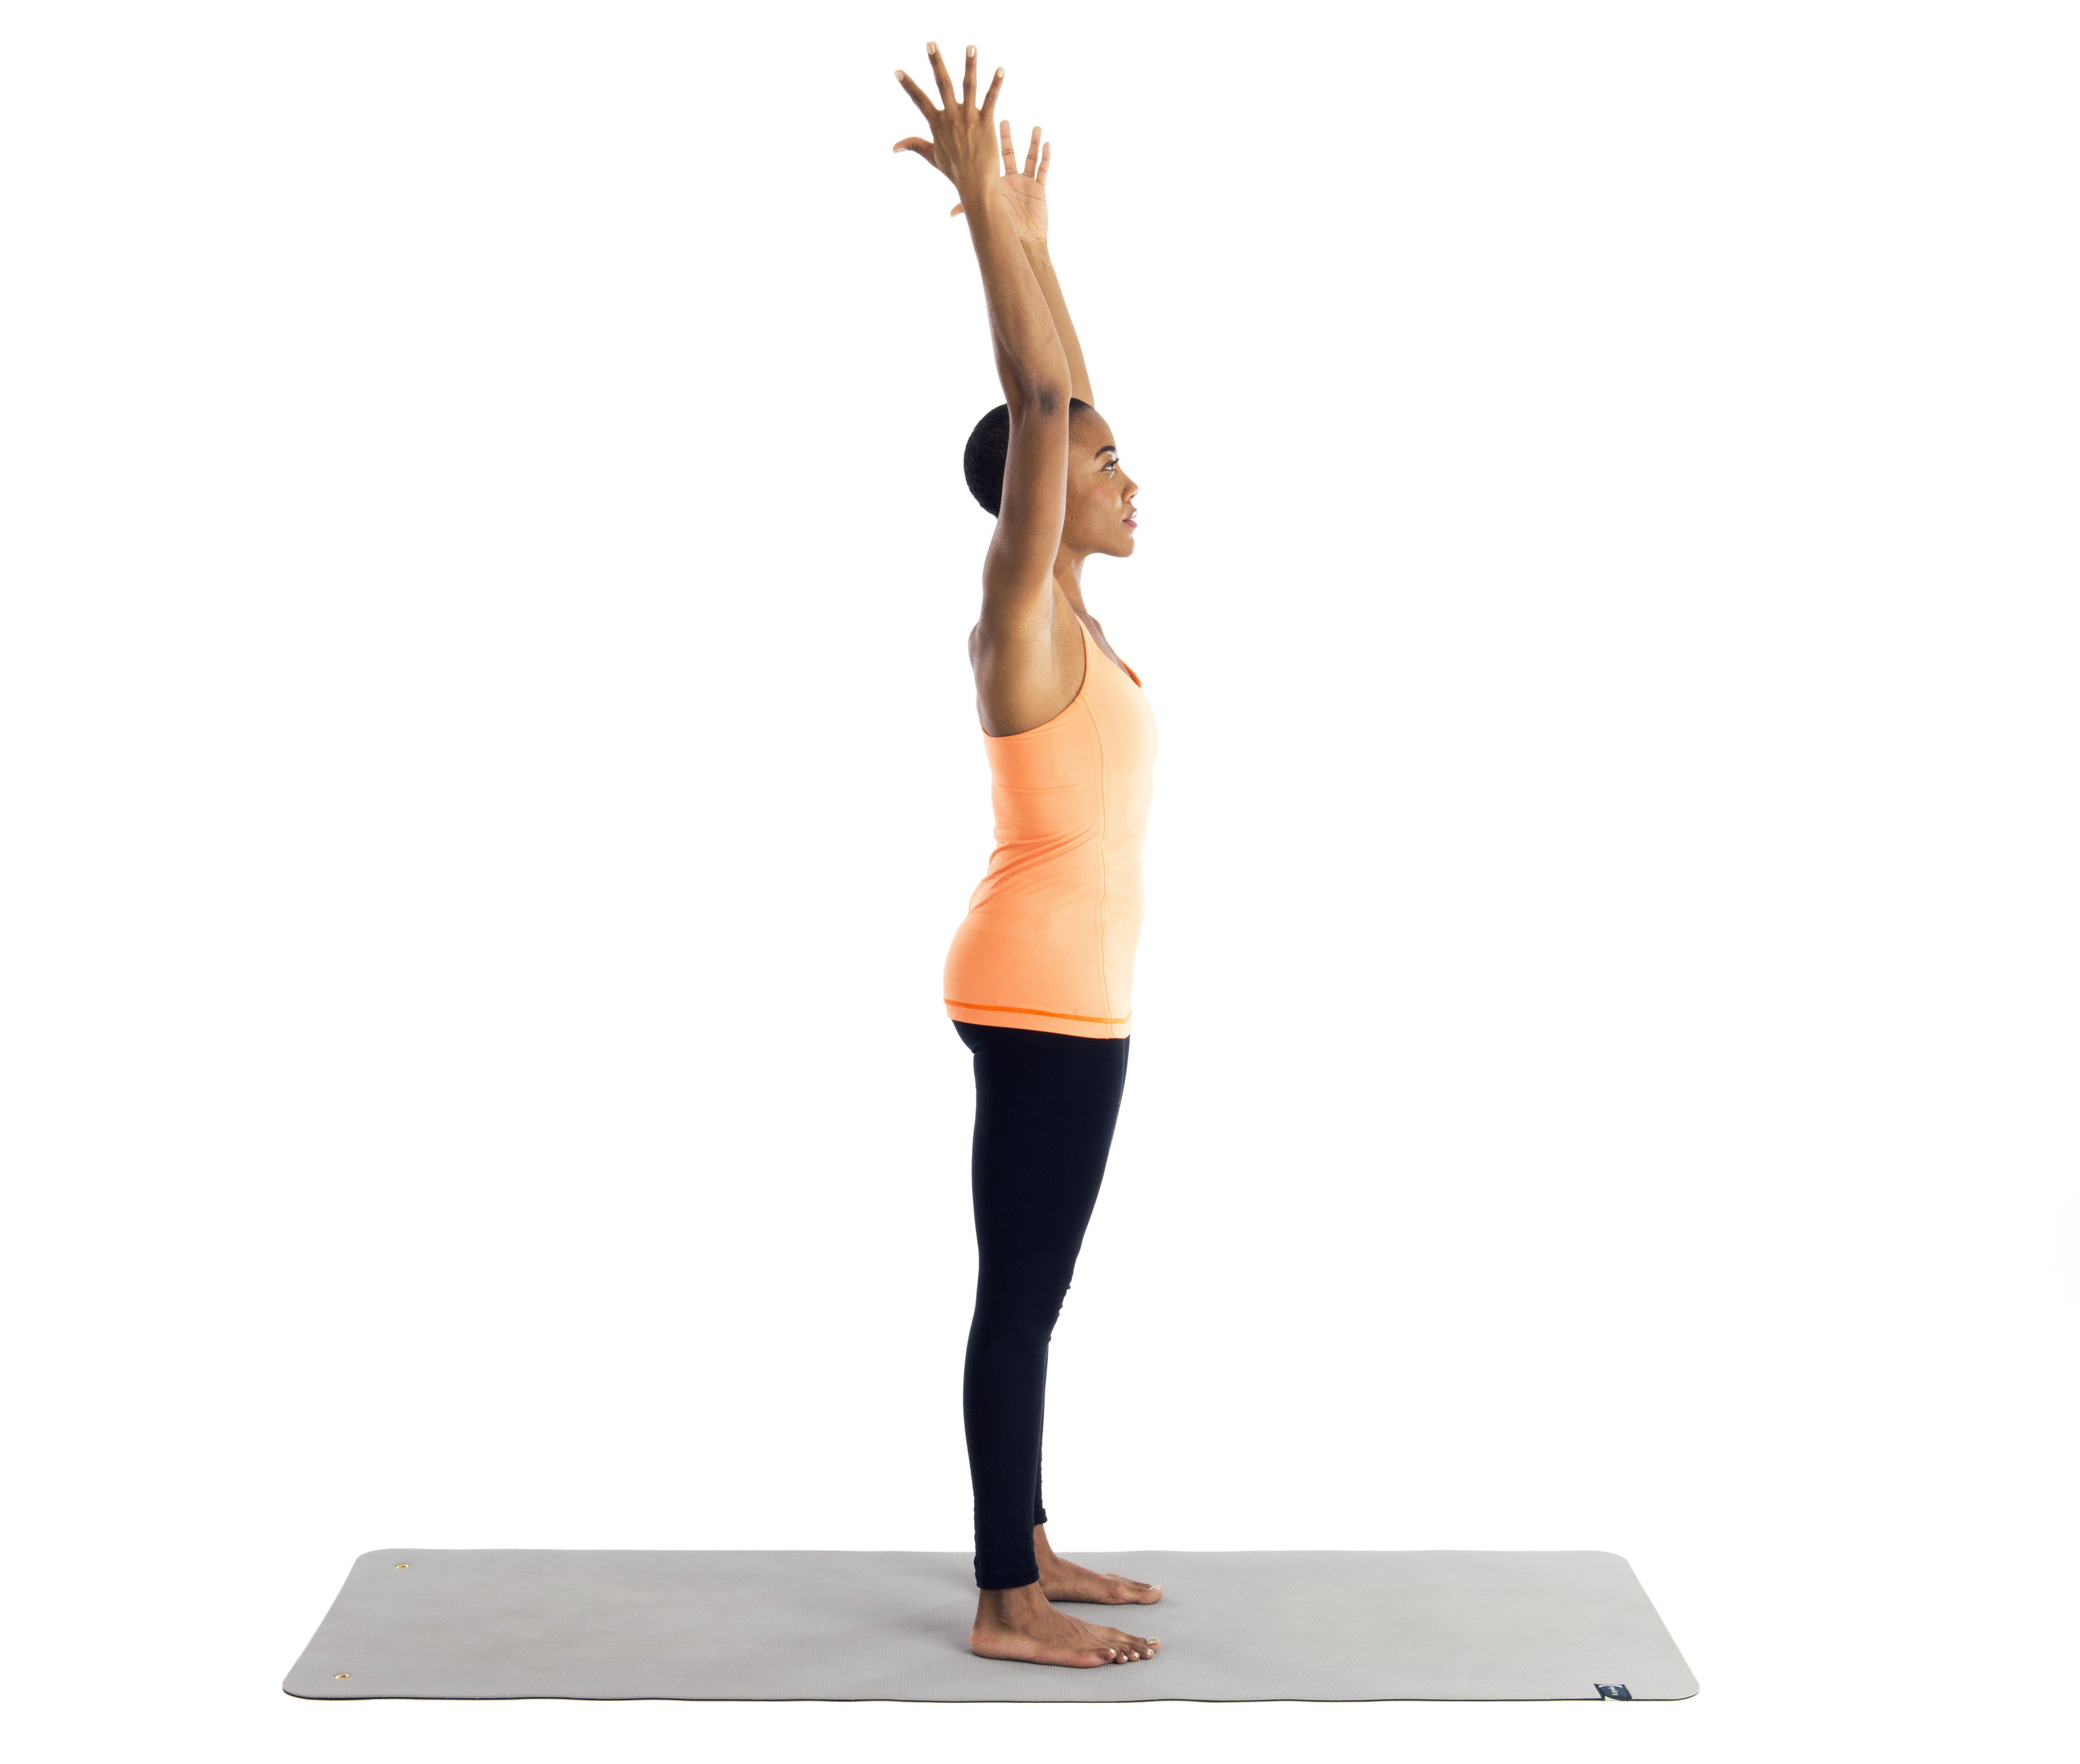 8 Standing Yoga Poses to Build Balance and Strength | SELF